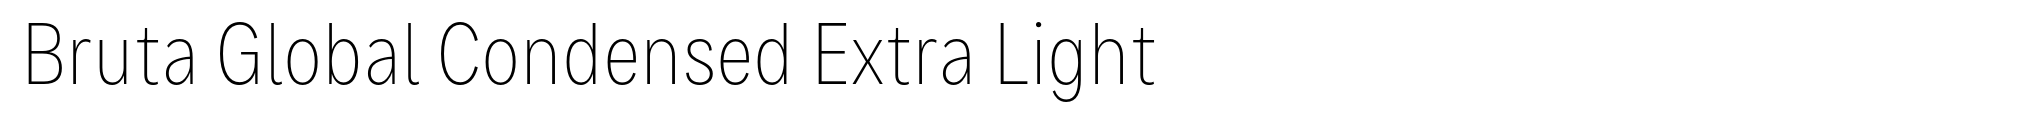 Bruta Global Condensed Extra Light image